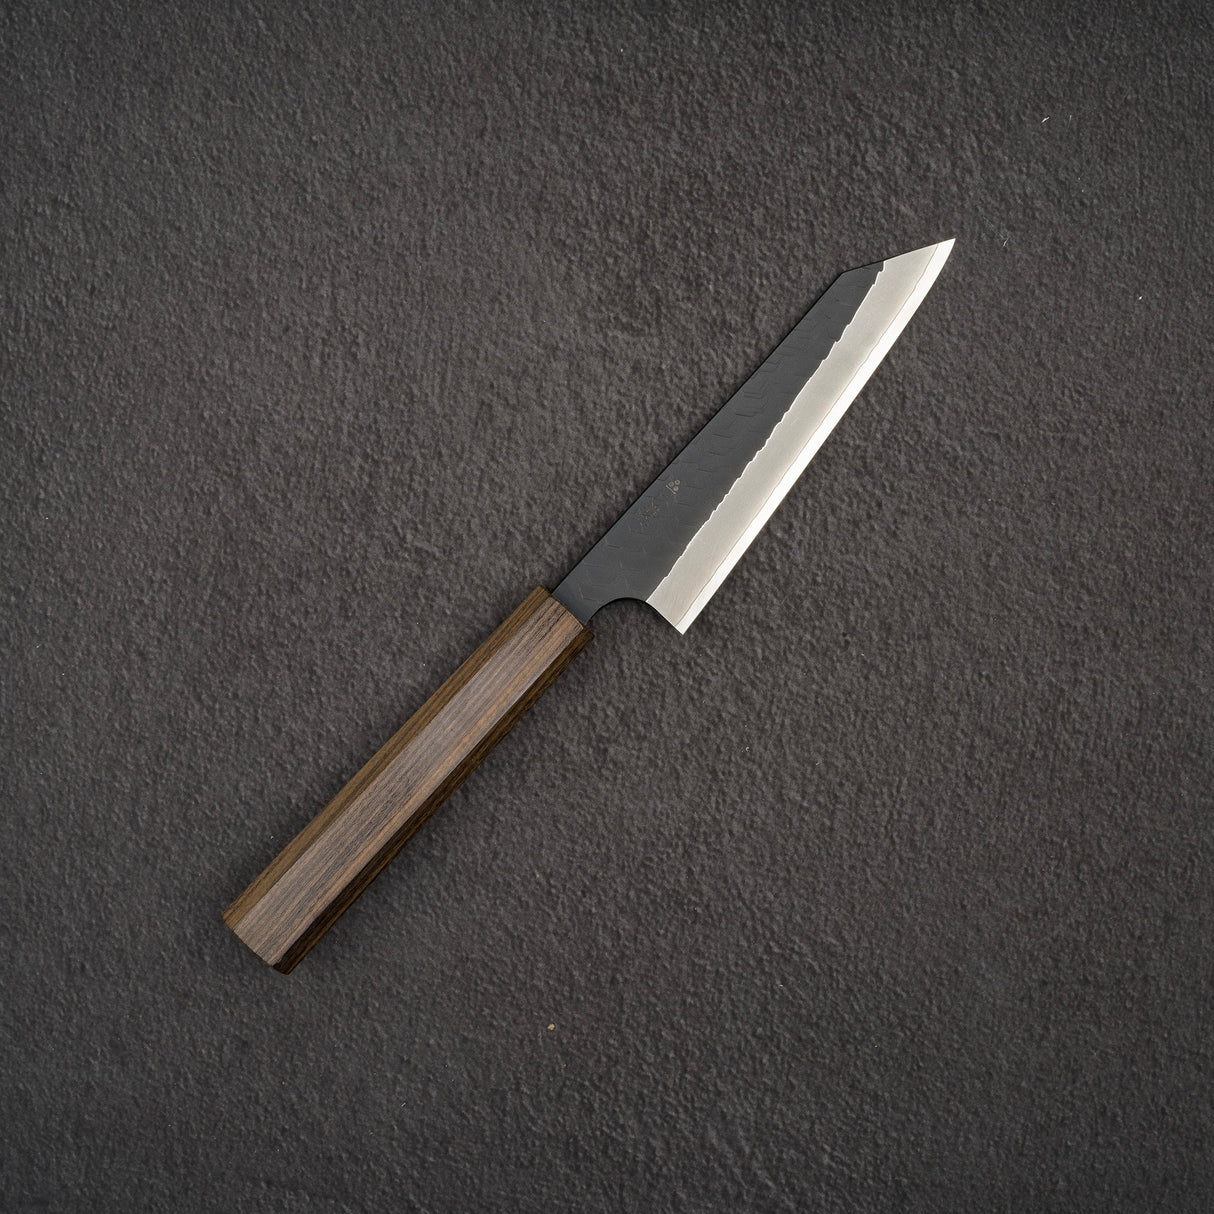 Nigara SG2 Kurouchi Tsuchime Double-bevel Honesuki (Boning knife) 150mm Black Cha